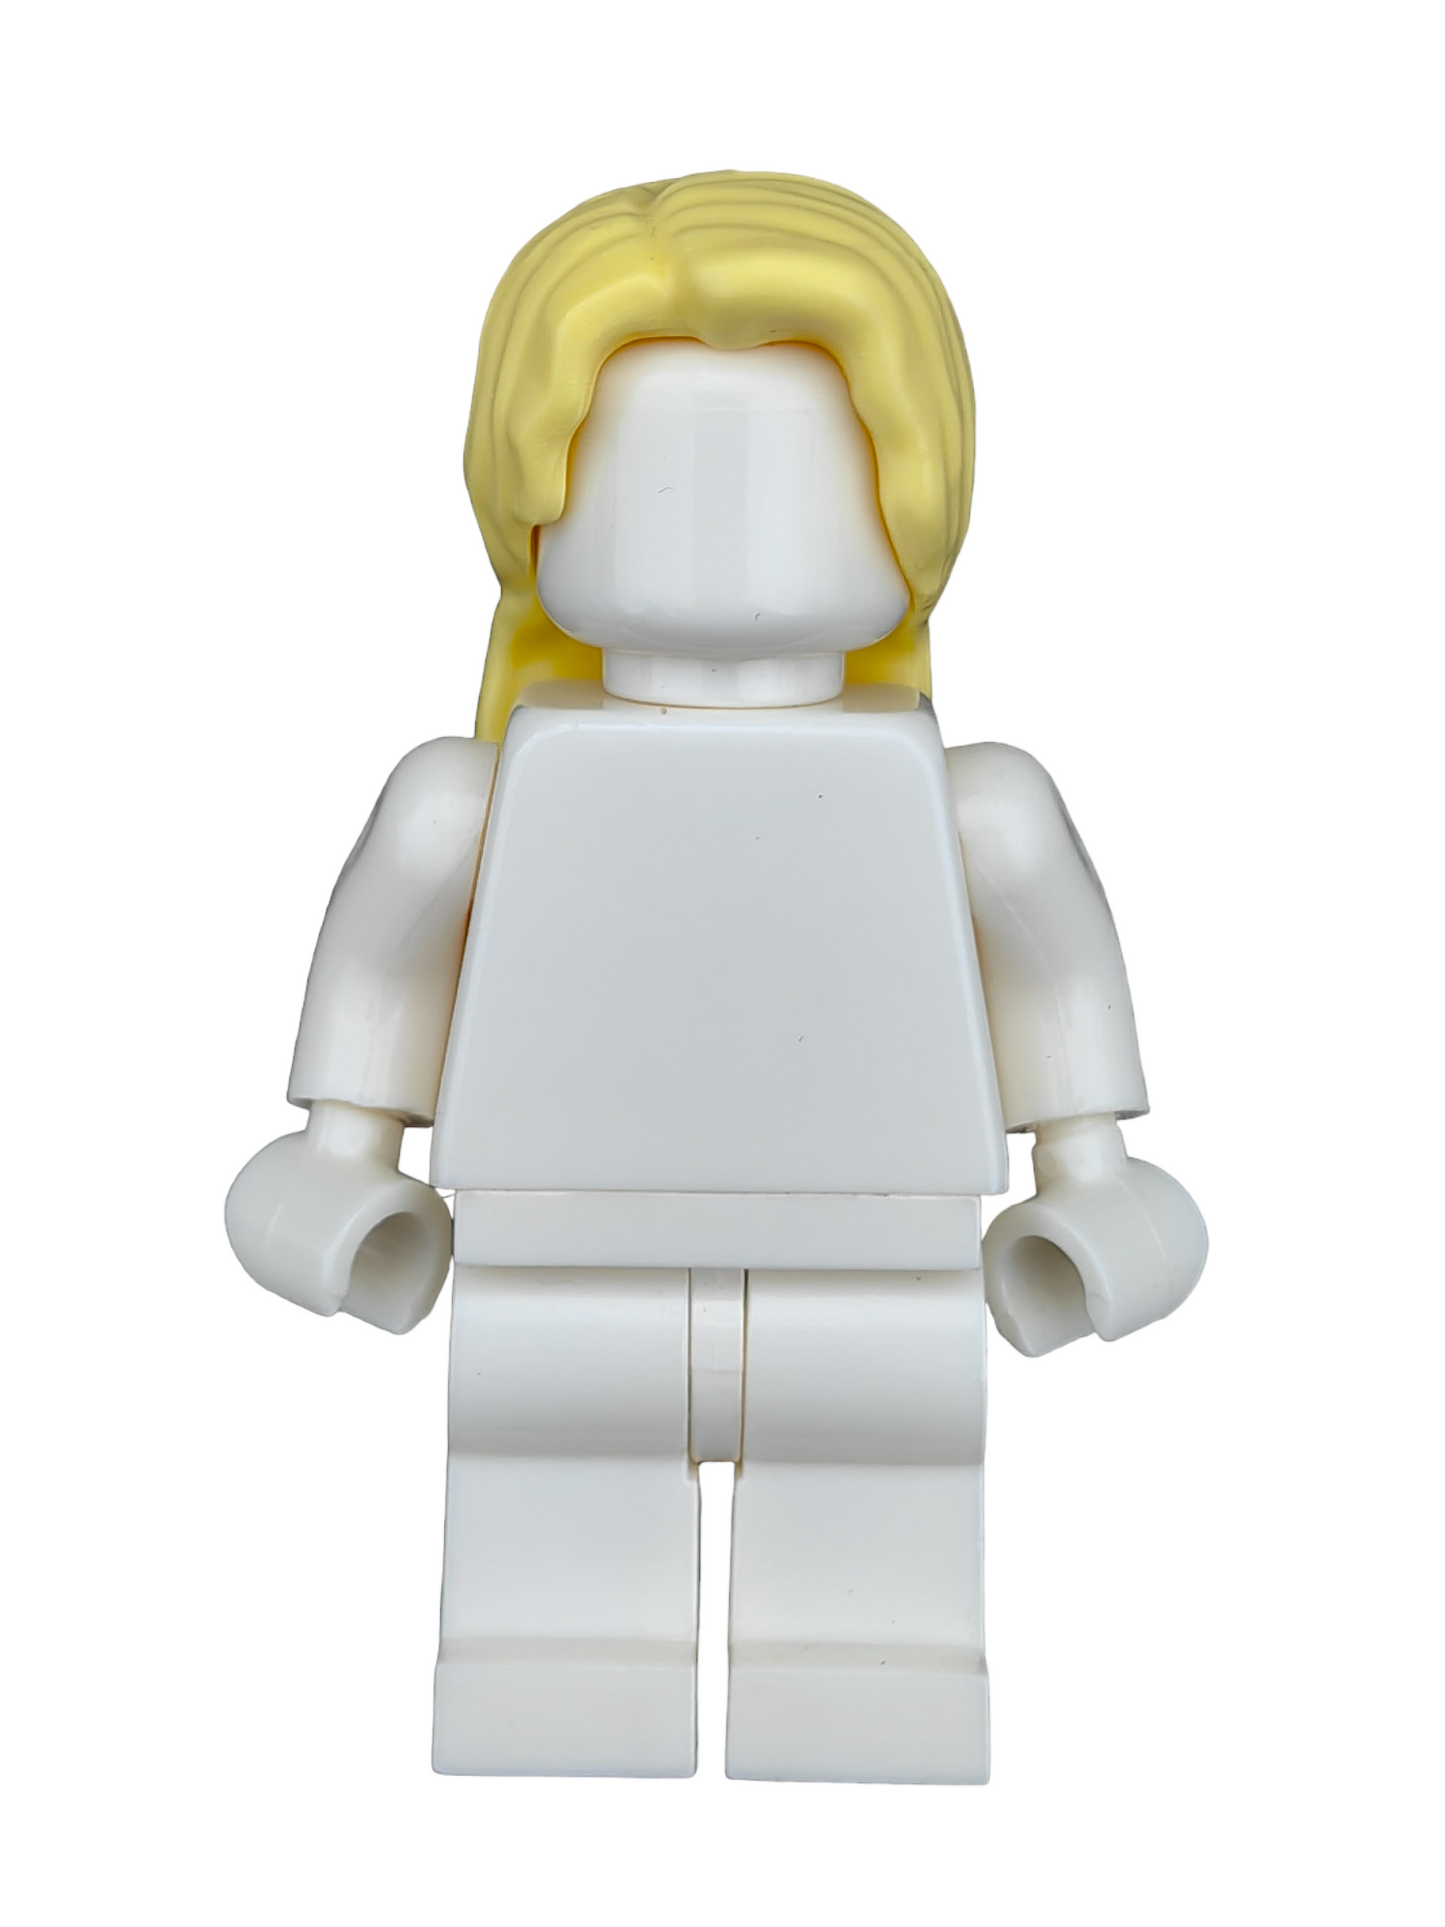 LEGO Wig, Yellow Hair Long - UB1253